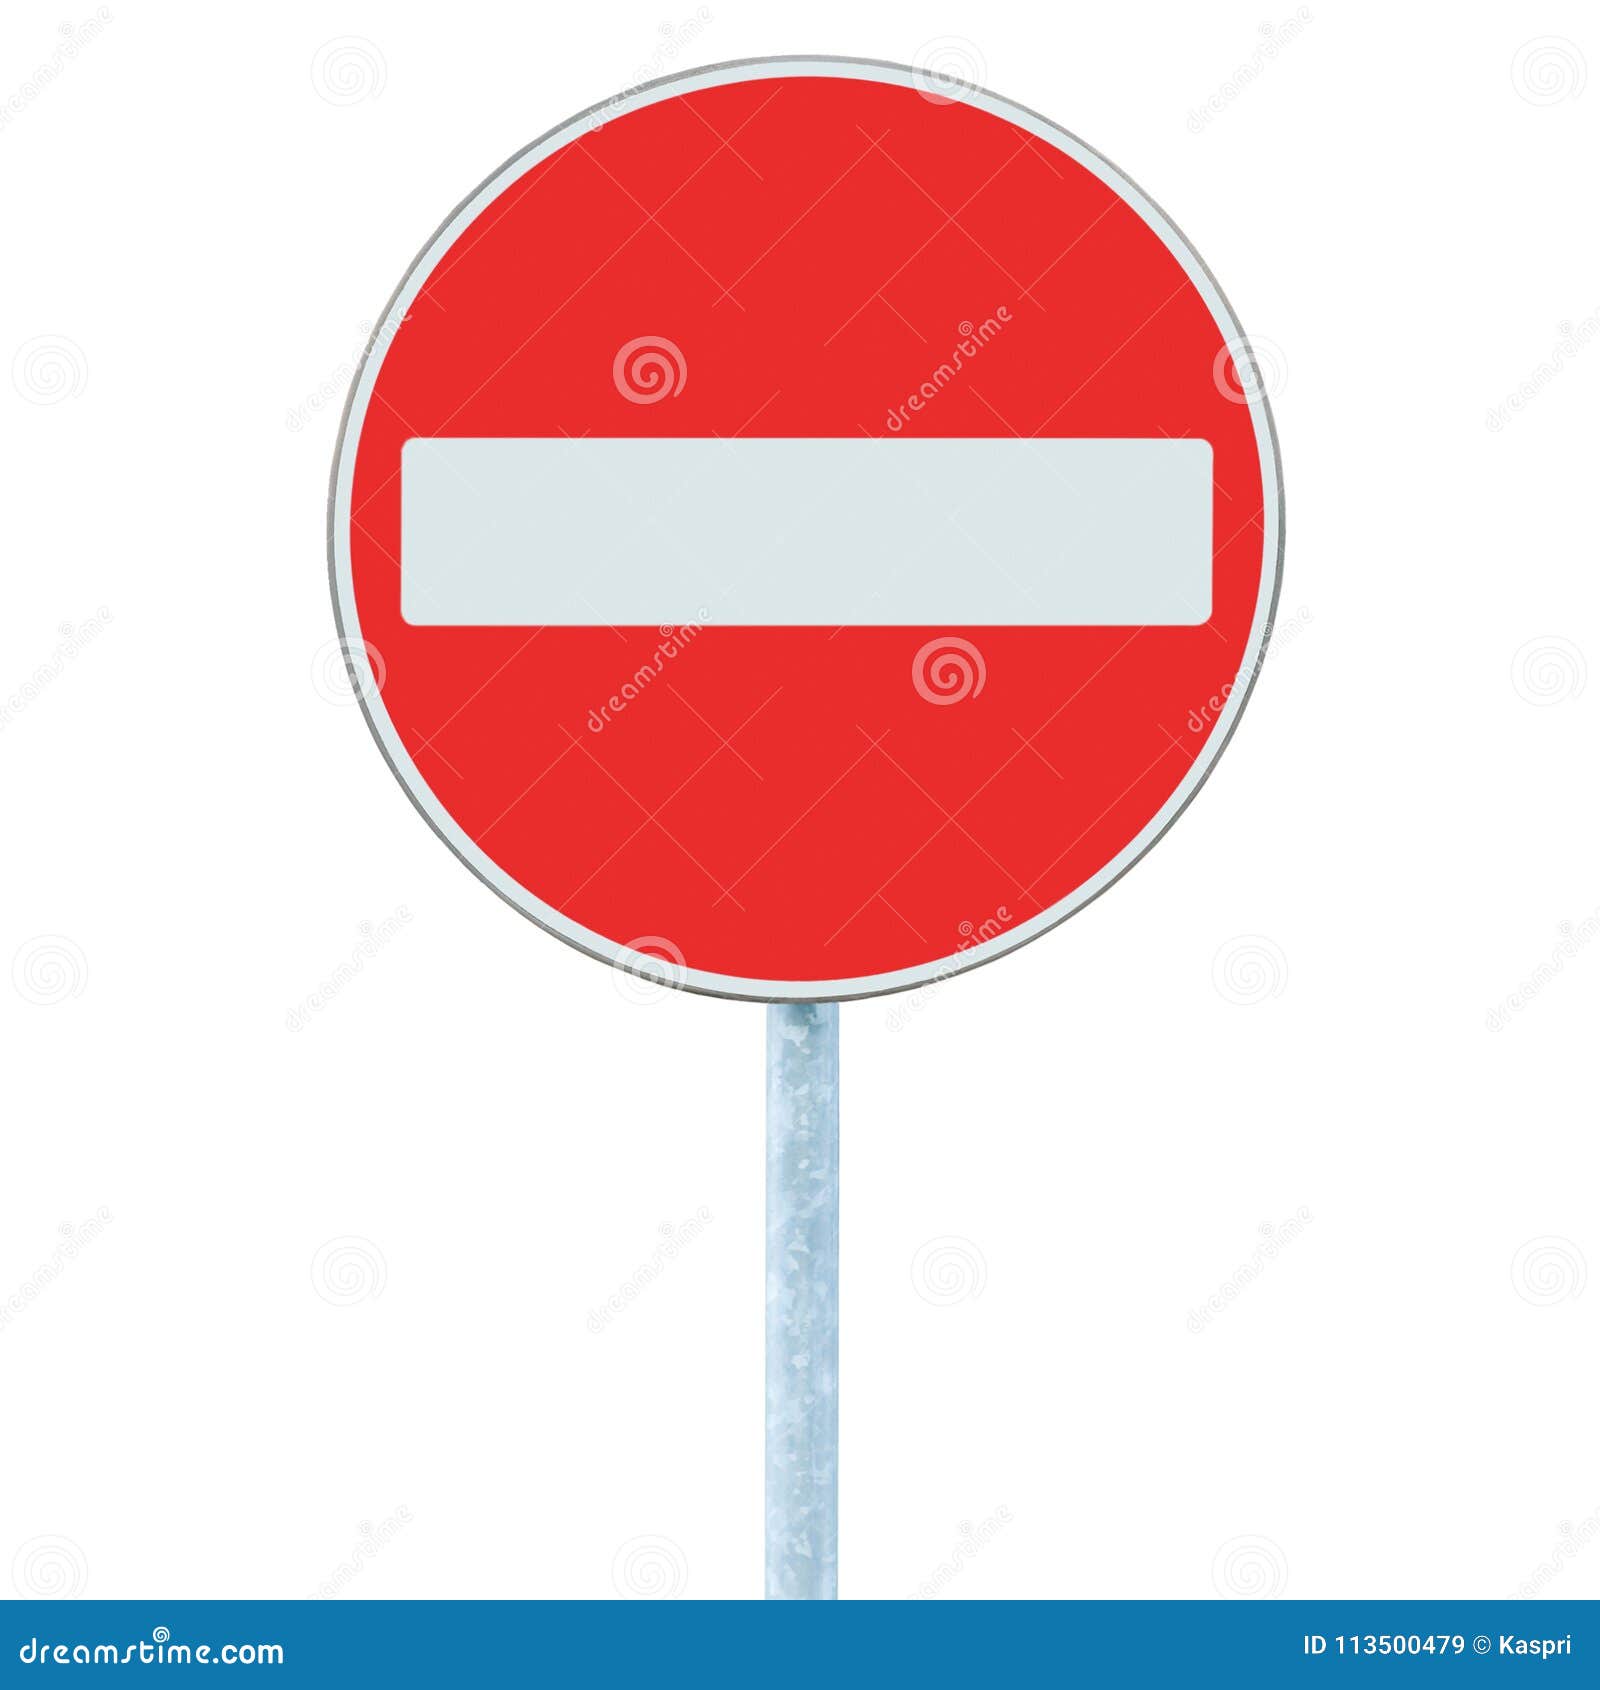 Белый кирпич знак. Знак кирпич. Проезд запрещен дорожный знак. Дорожный знак на столбе. Знак кирпич на прозрачном фоне.